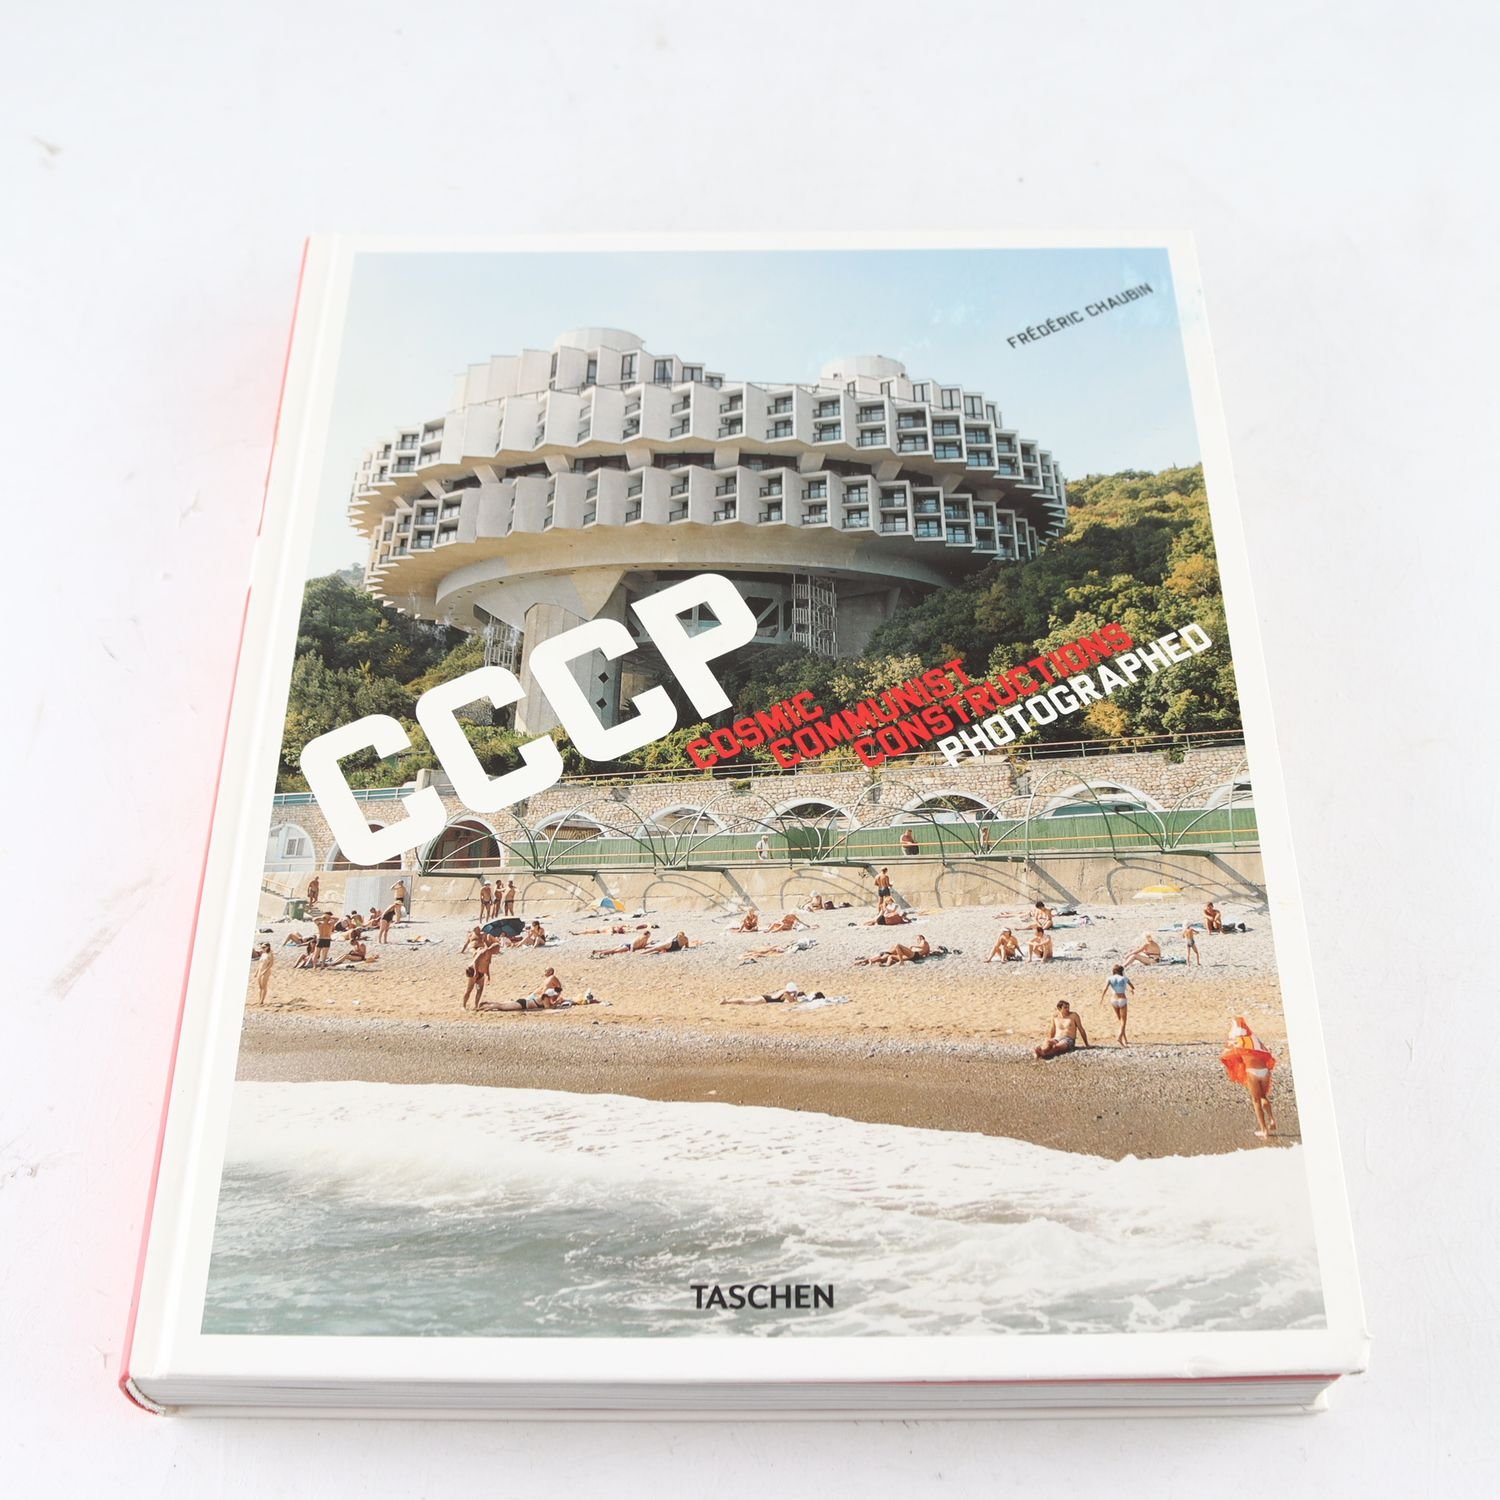 CSSP, Cosmic communist constructions photographed